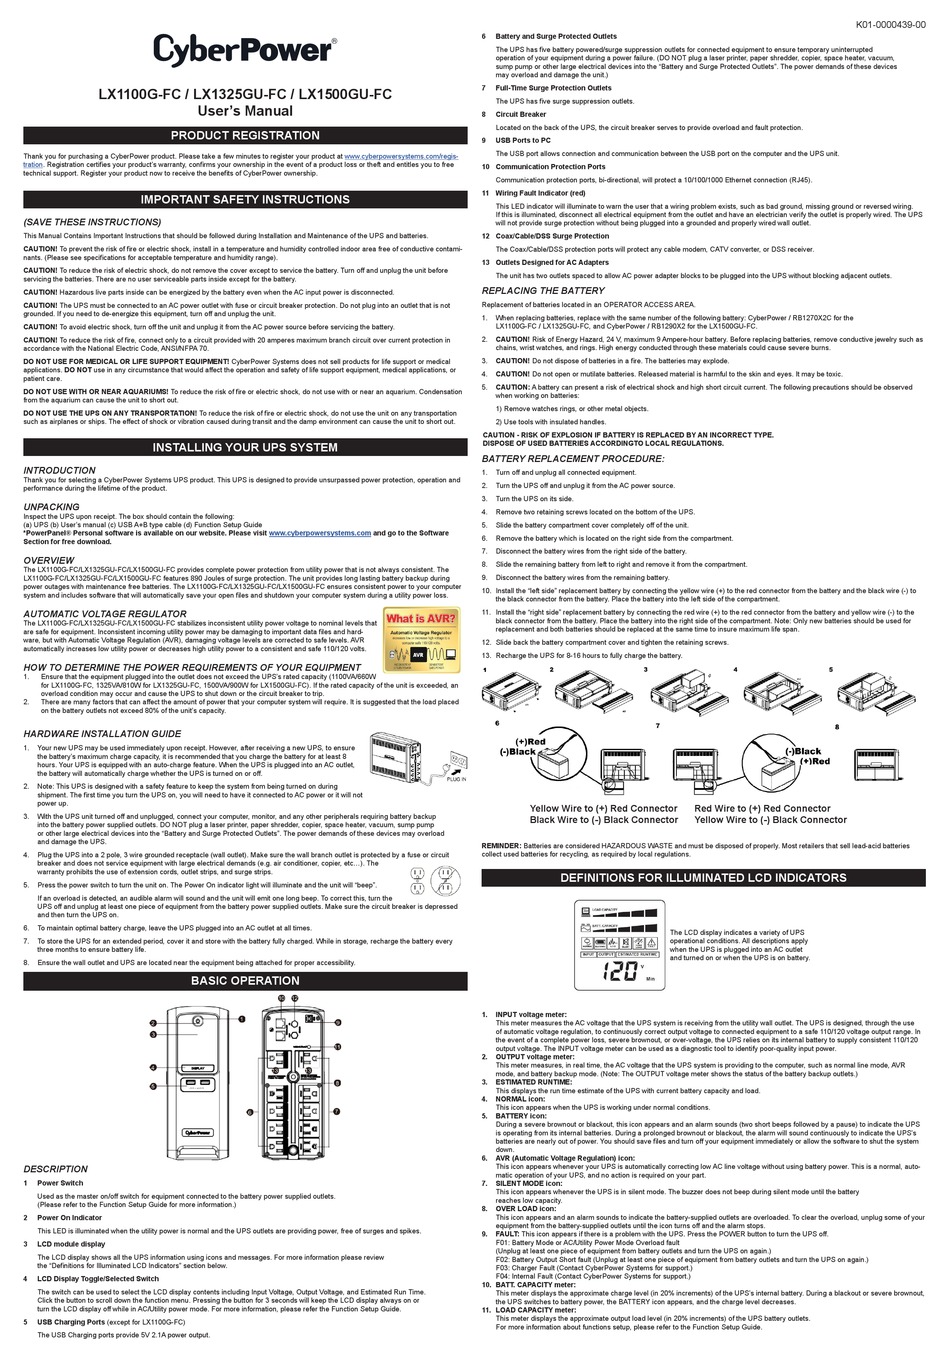 cyberpower-lx1100g-fc-user-manual-pdf-download-manualslib